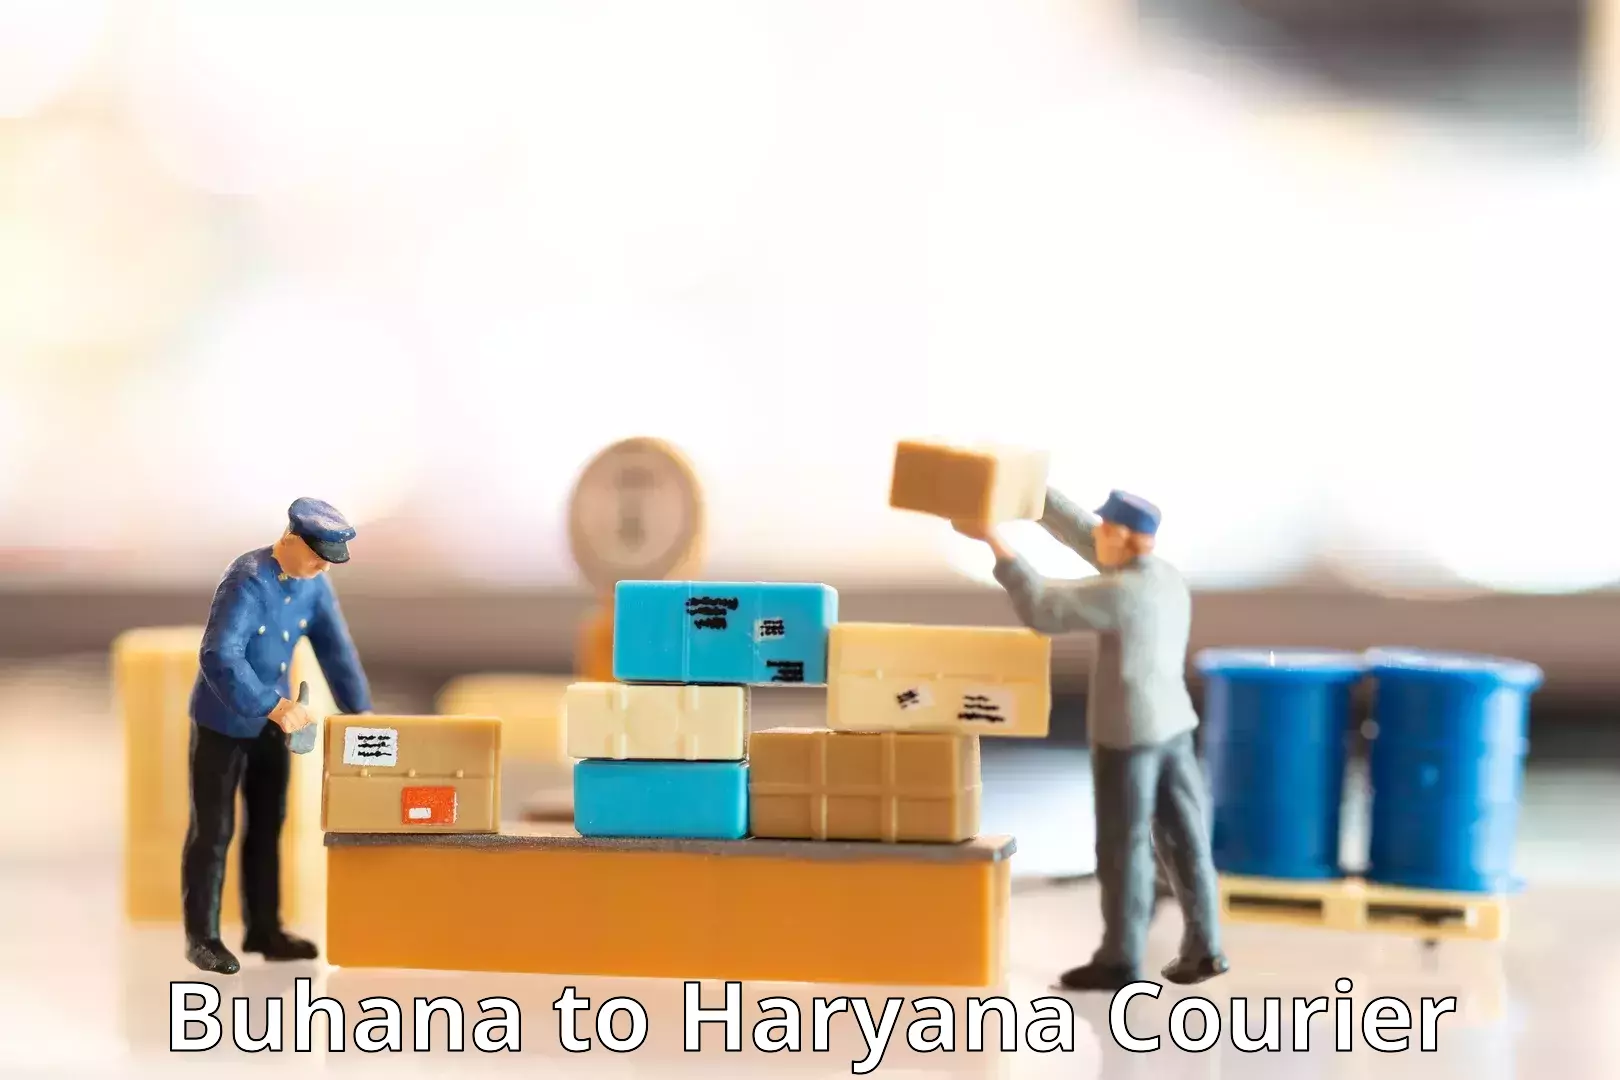 Courier app Buhana to Gurugram